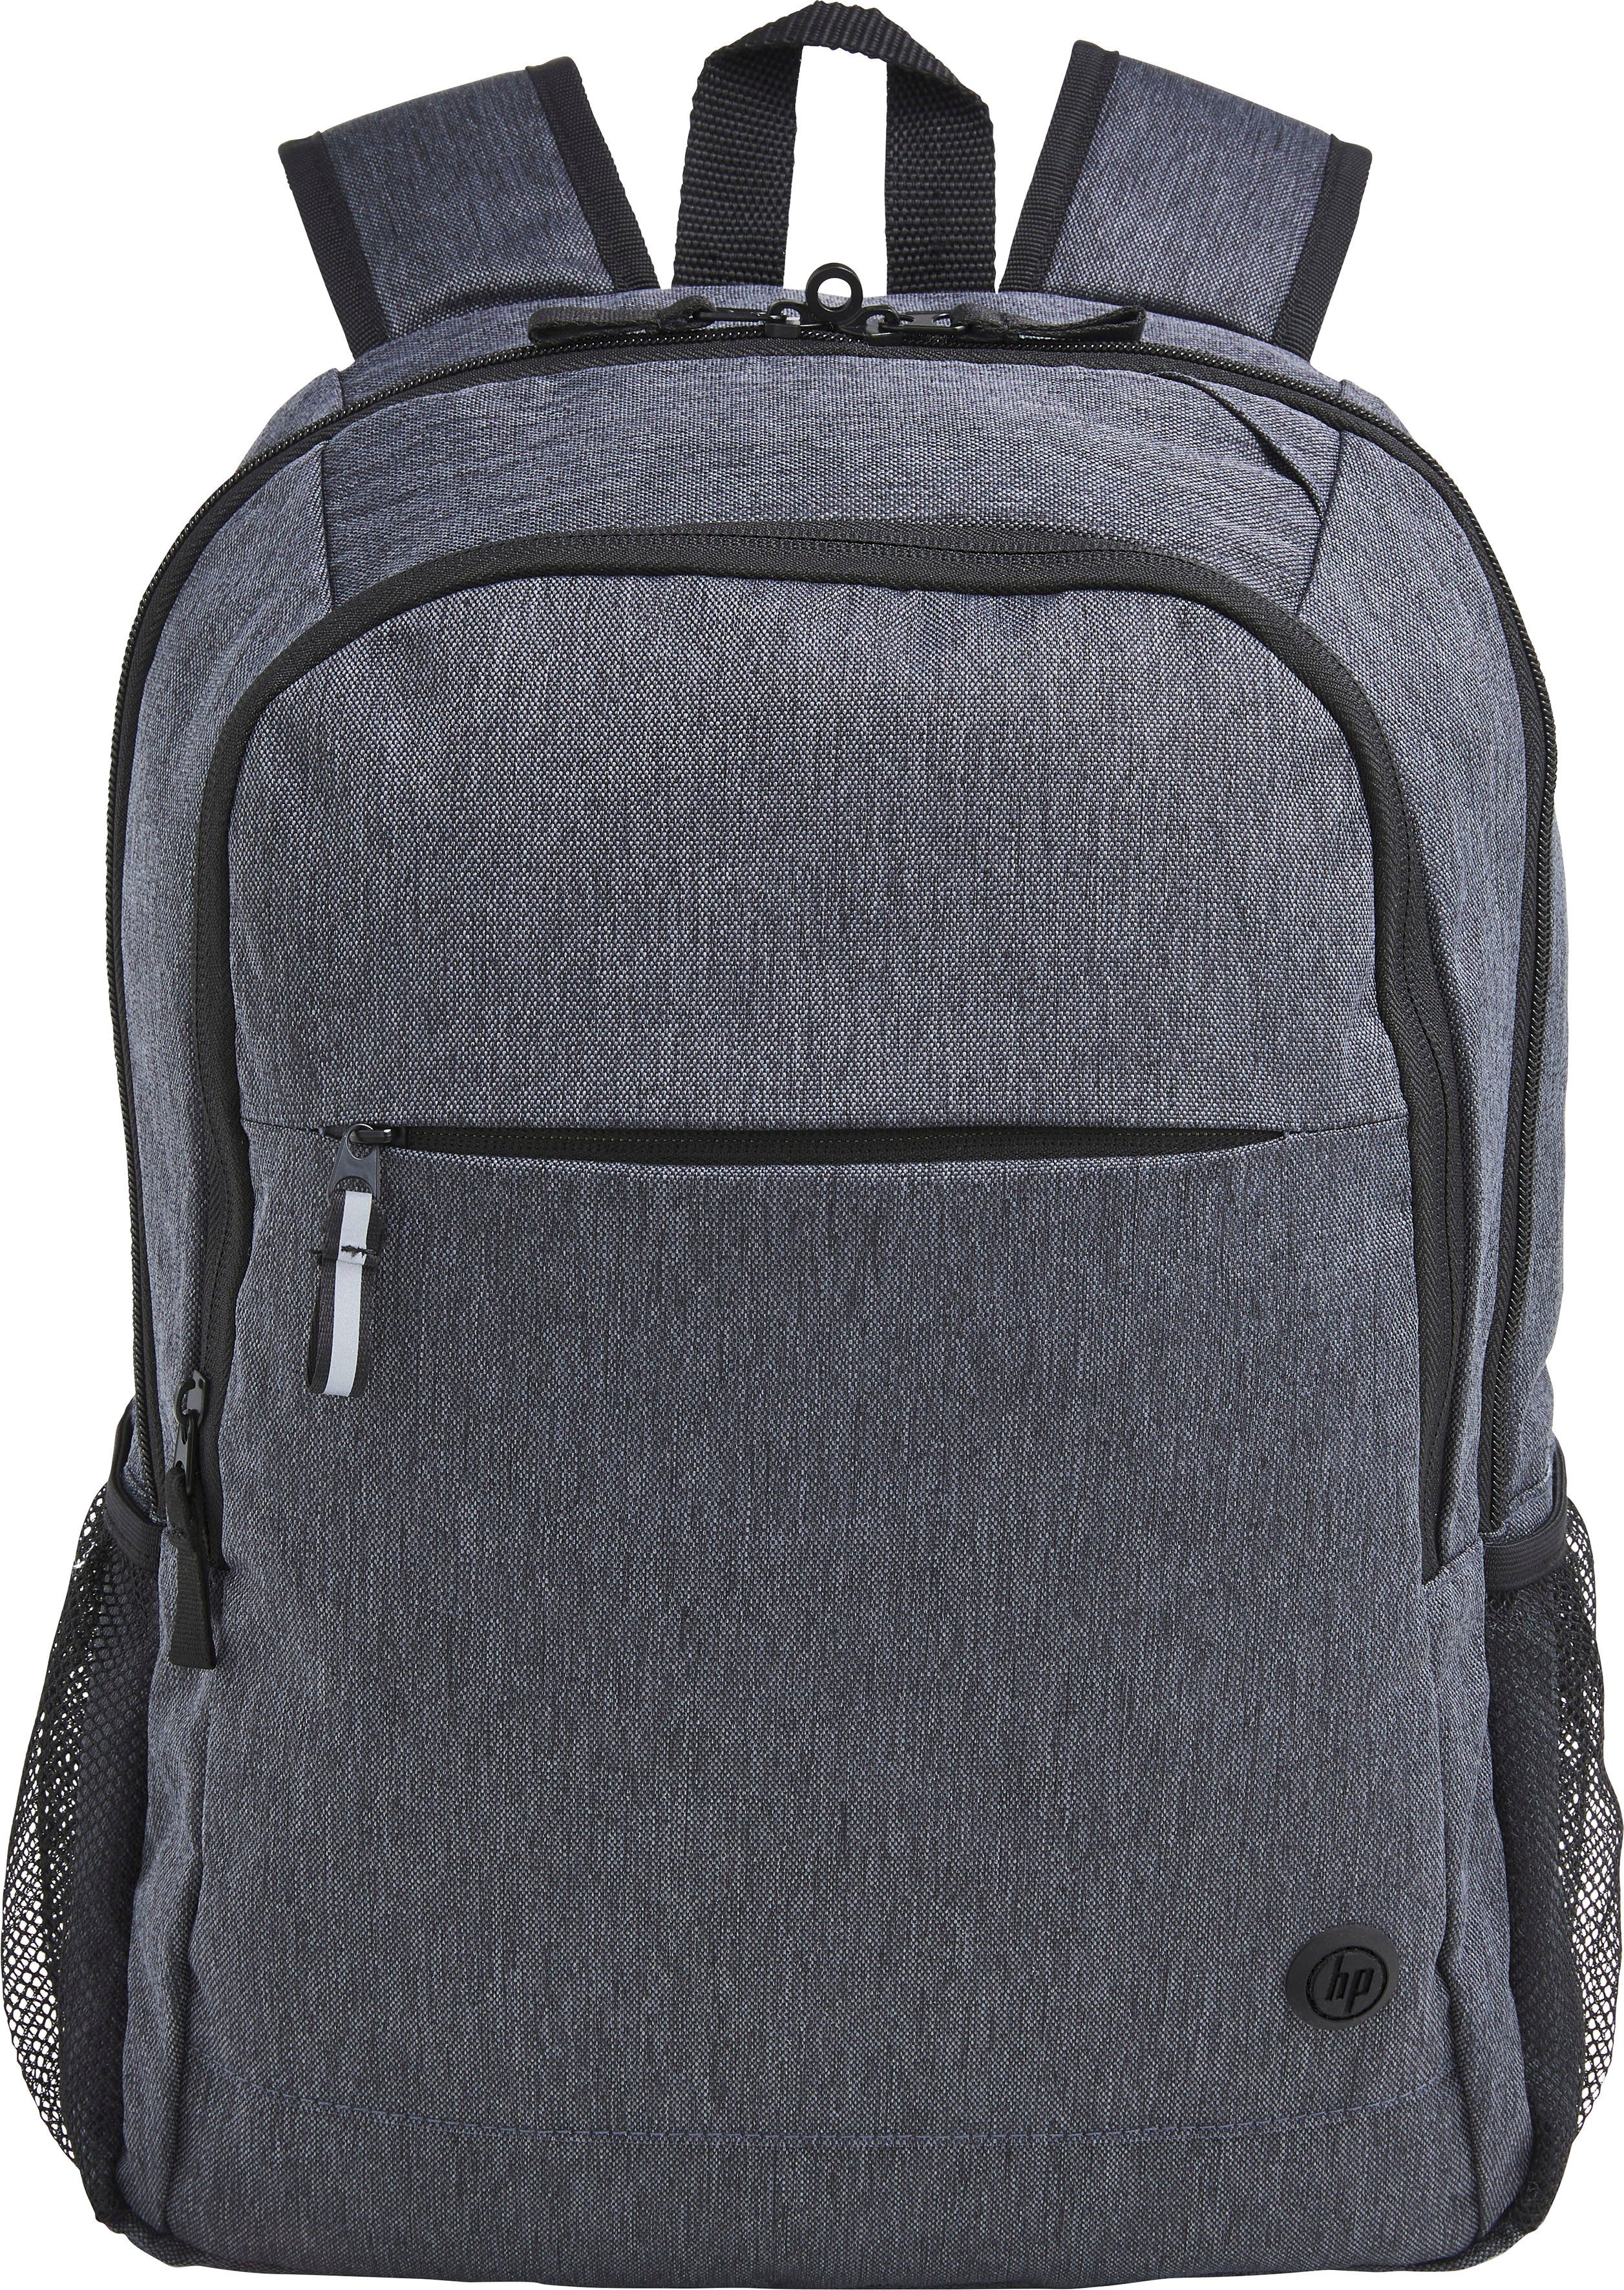 Prelude Pro 15,6" Backpack Notebookrucksack HP